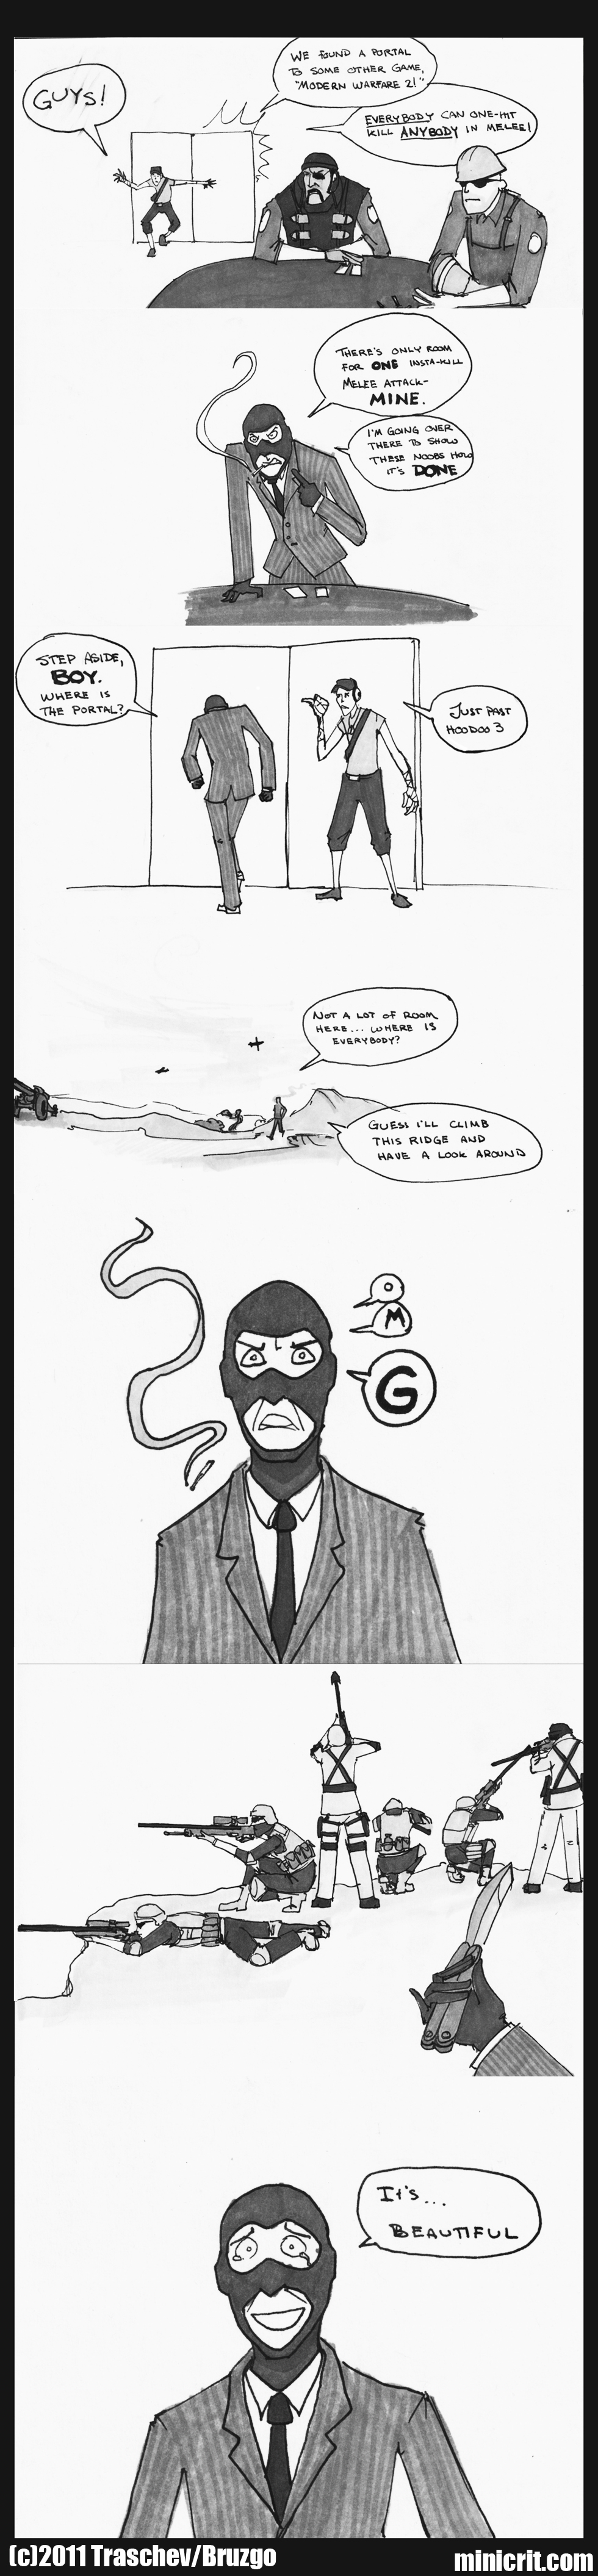 http://minicrit.com/comics/2011-06-06-Spy-in-Sniperland.jpg